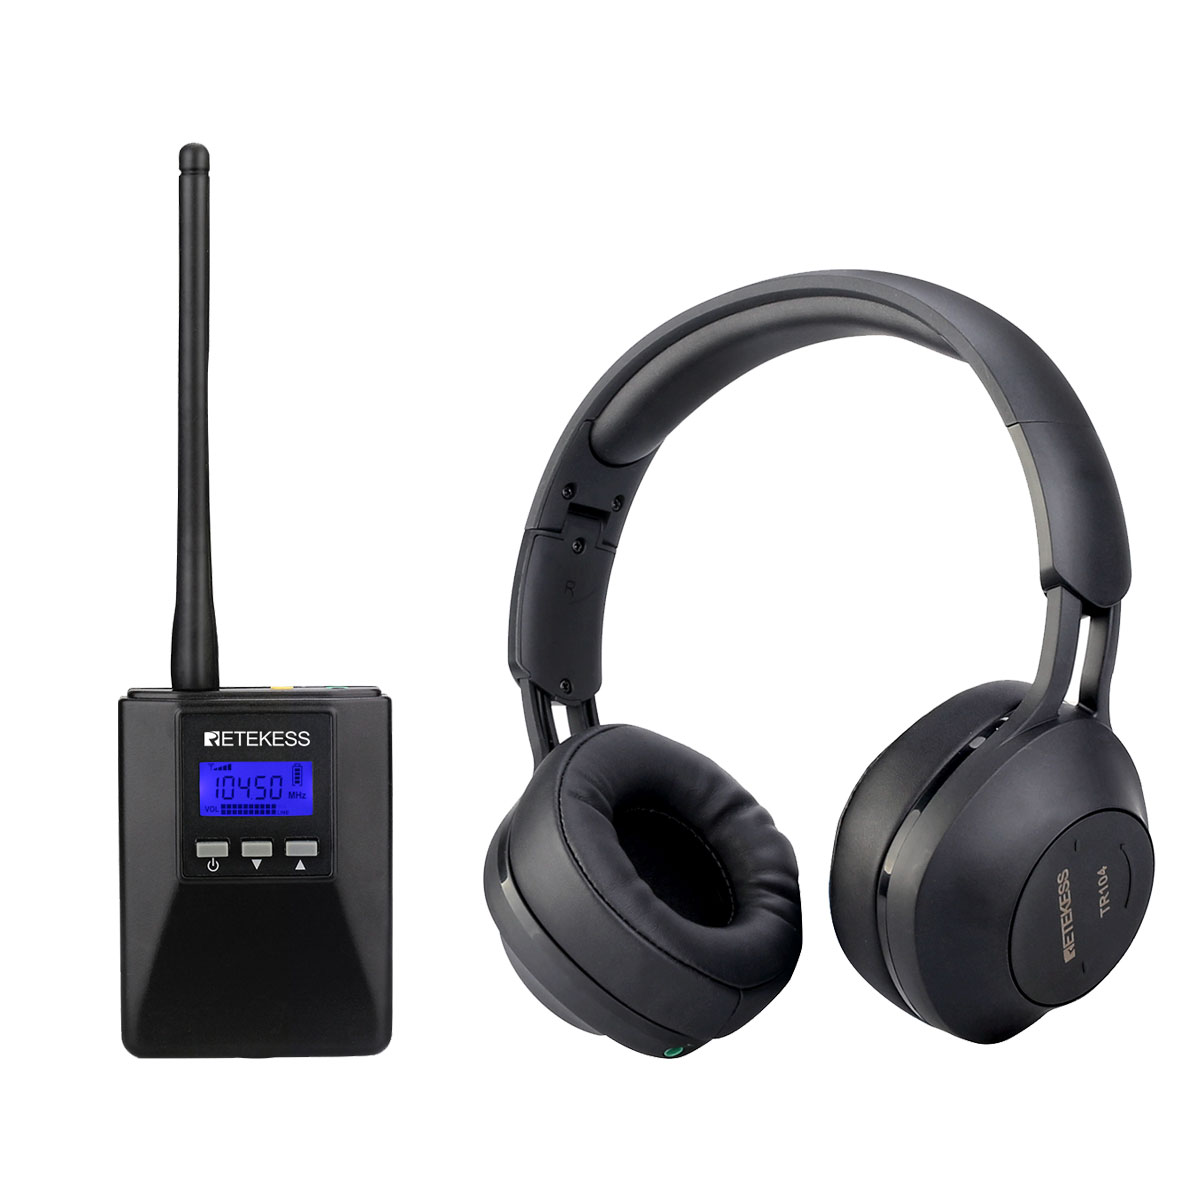 Retekess TR506 FM largo alcance Transmisor TR104 FM Auriculares Receptor